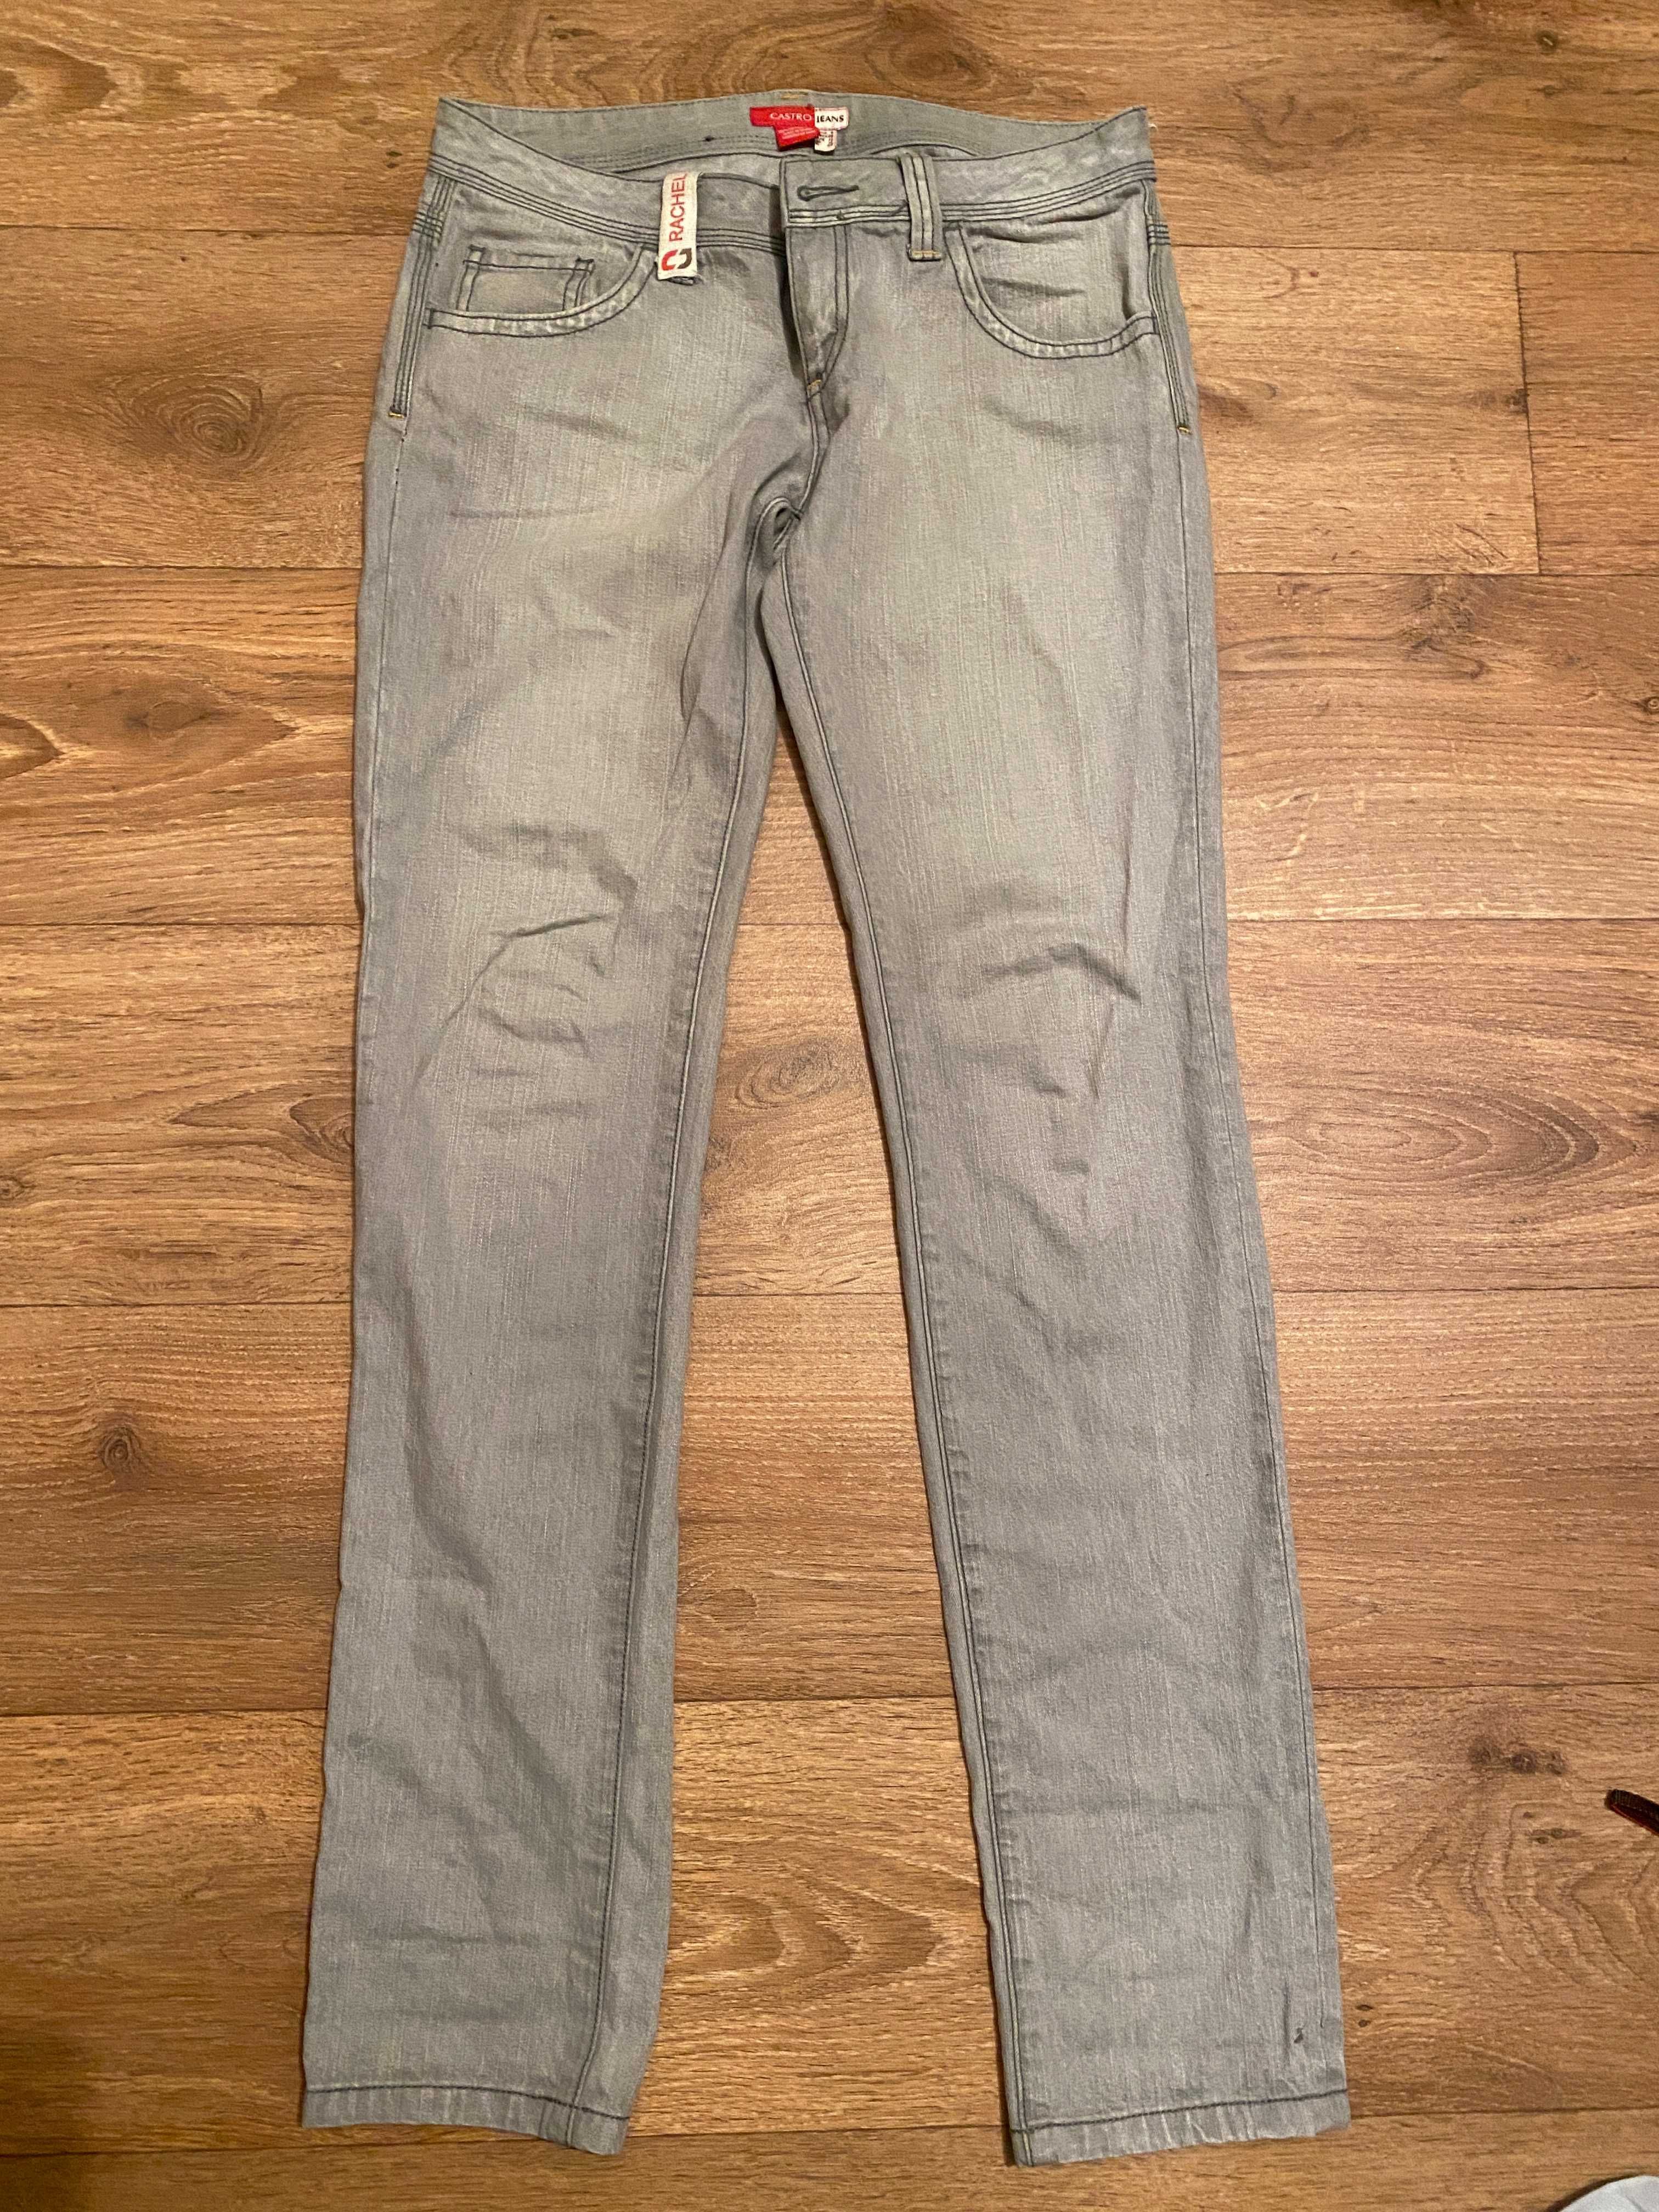 Пакет брендовых вещей джинс кофта шорты кардиган Kenzo Colins МNG ZARA